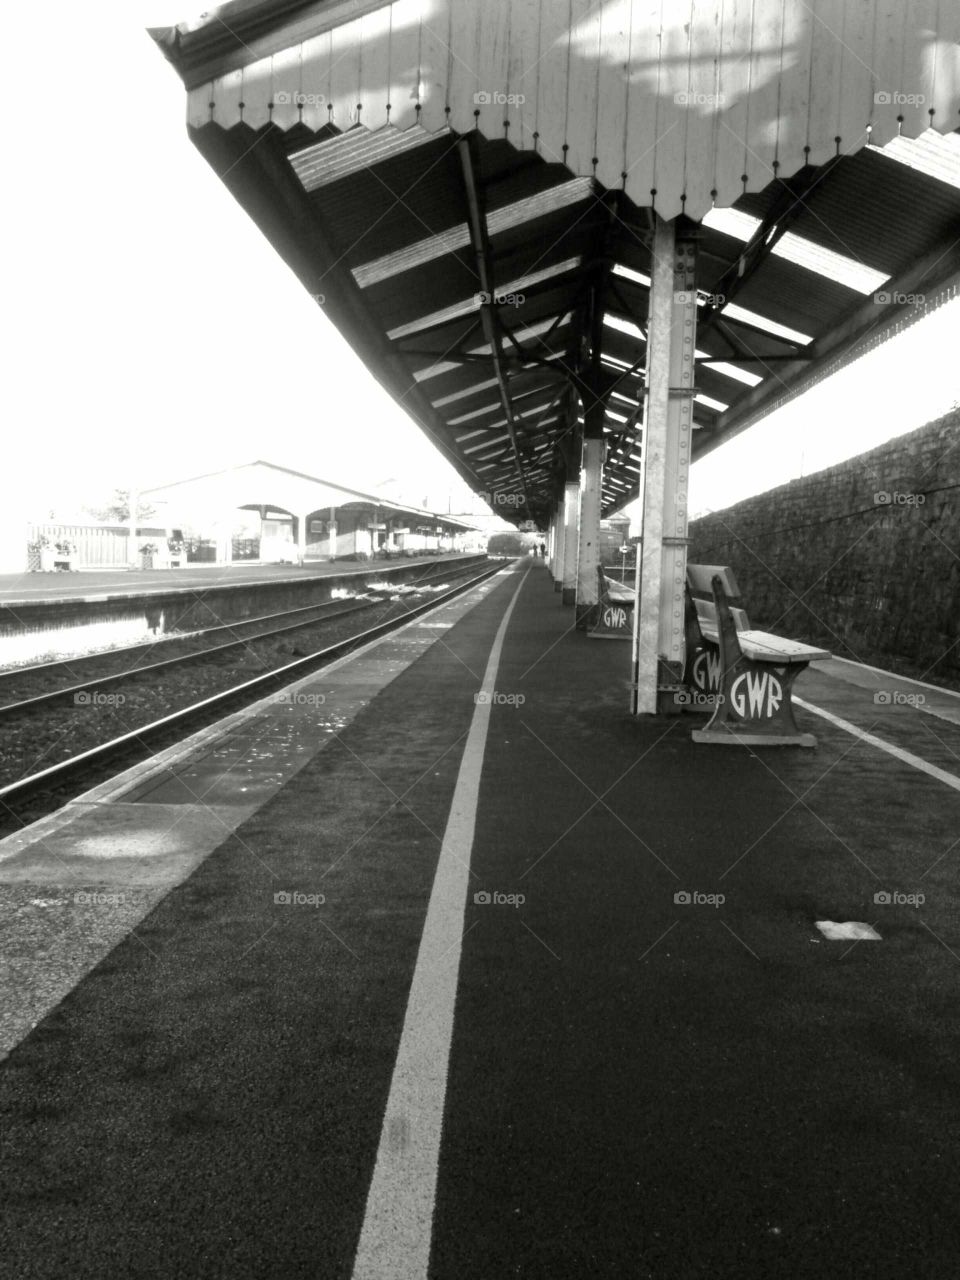 truro  Cornwall England train station.